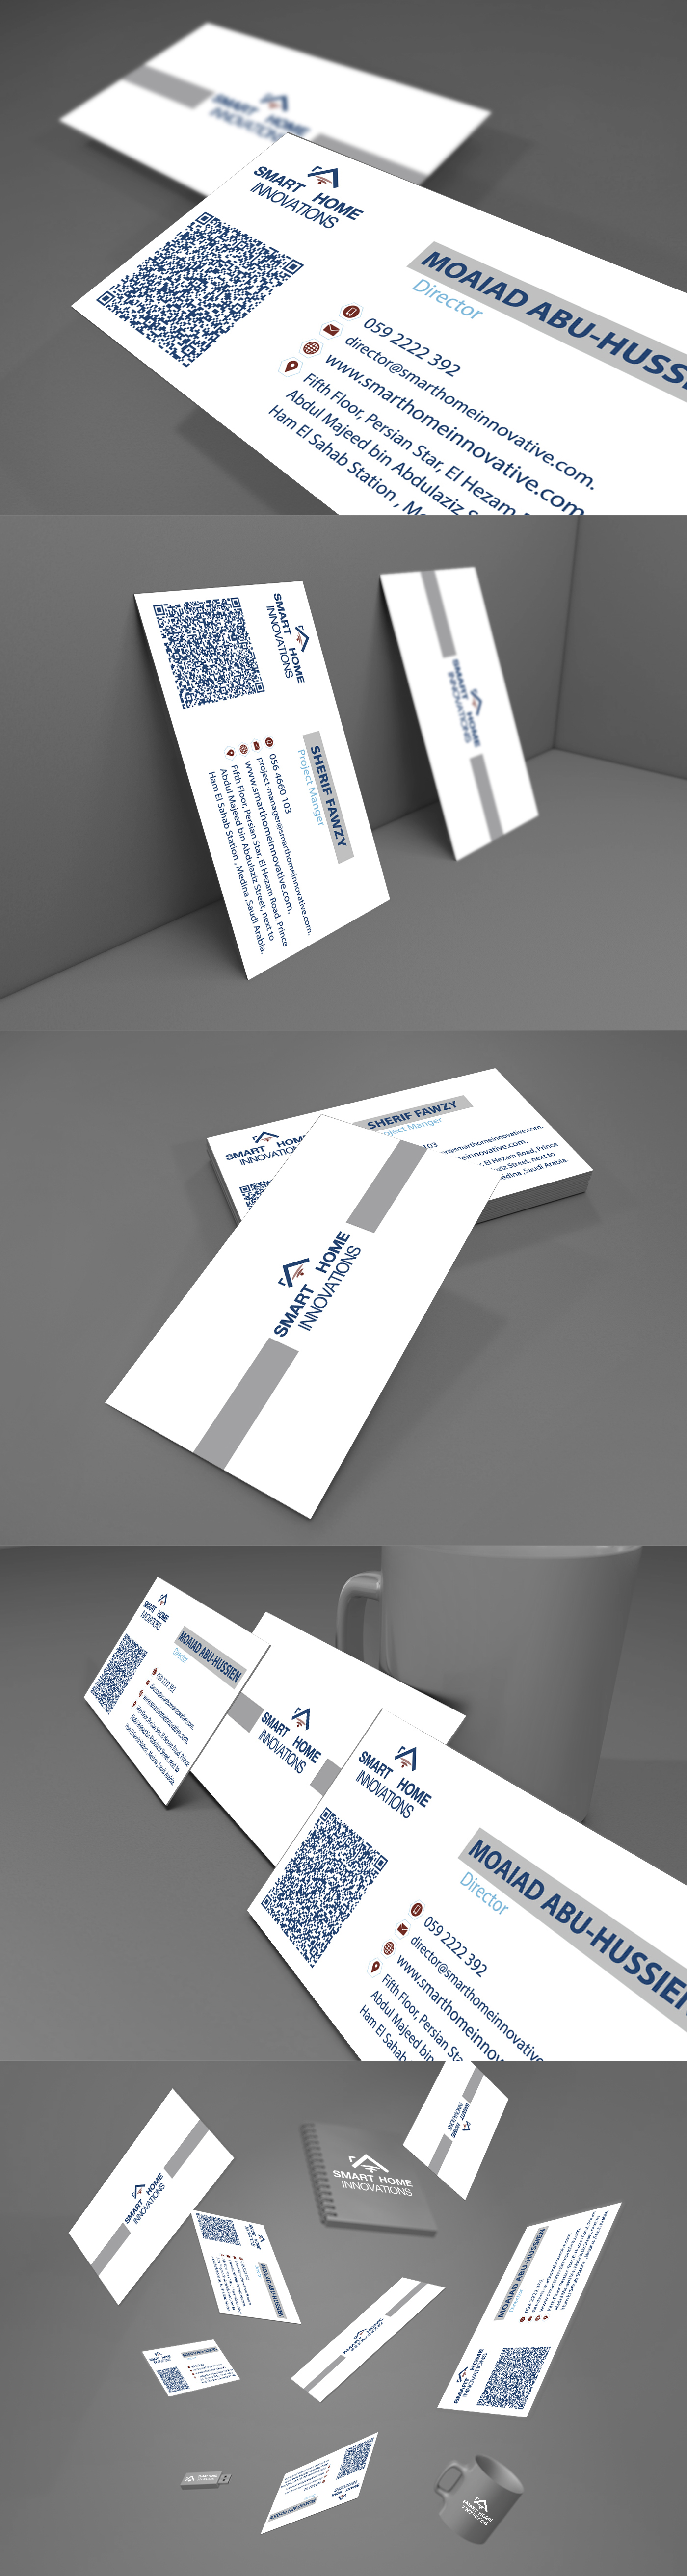 #identity # #Branding #printing #graphicDesign #Logo #Creative #Brochure #technology #smart #system